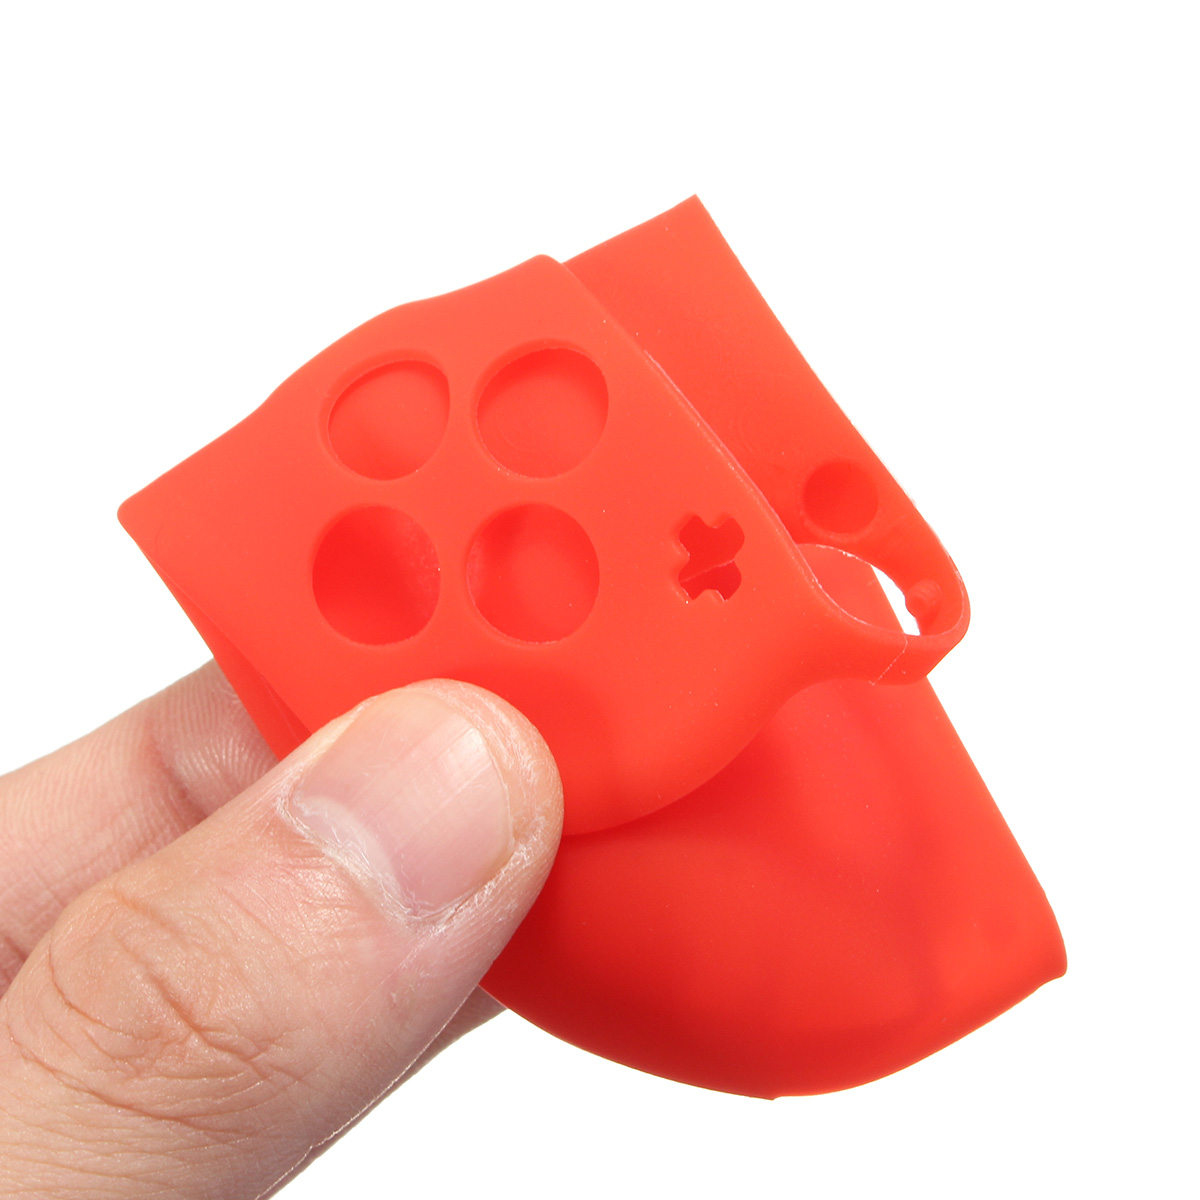 Silicon Case Protective Impact Resistant Rubber Skin Cover For Nintendo Switch Joy-Con Controller 12